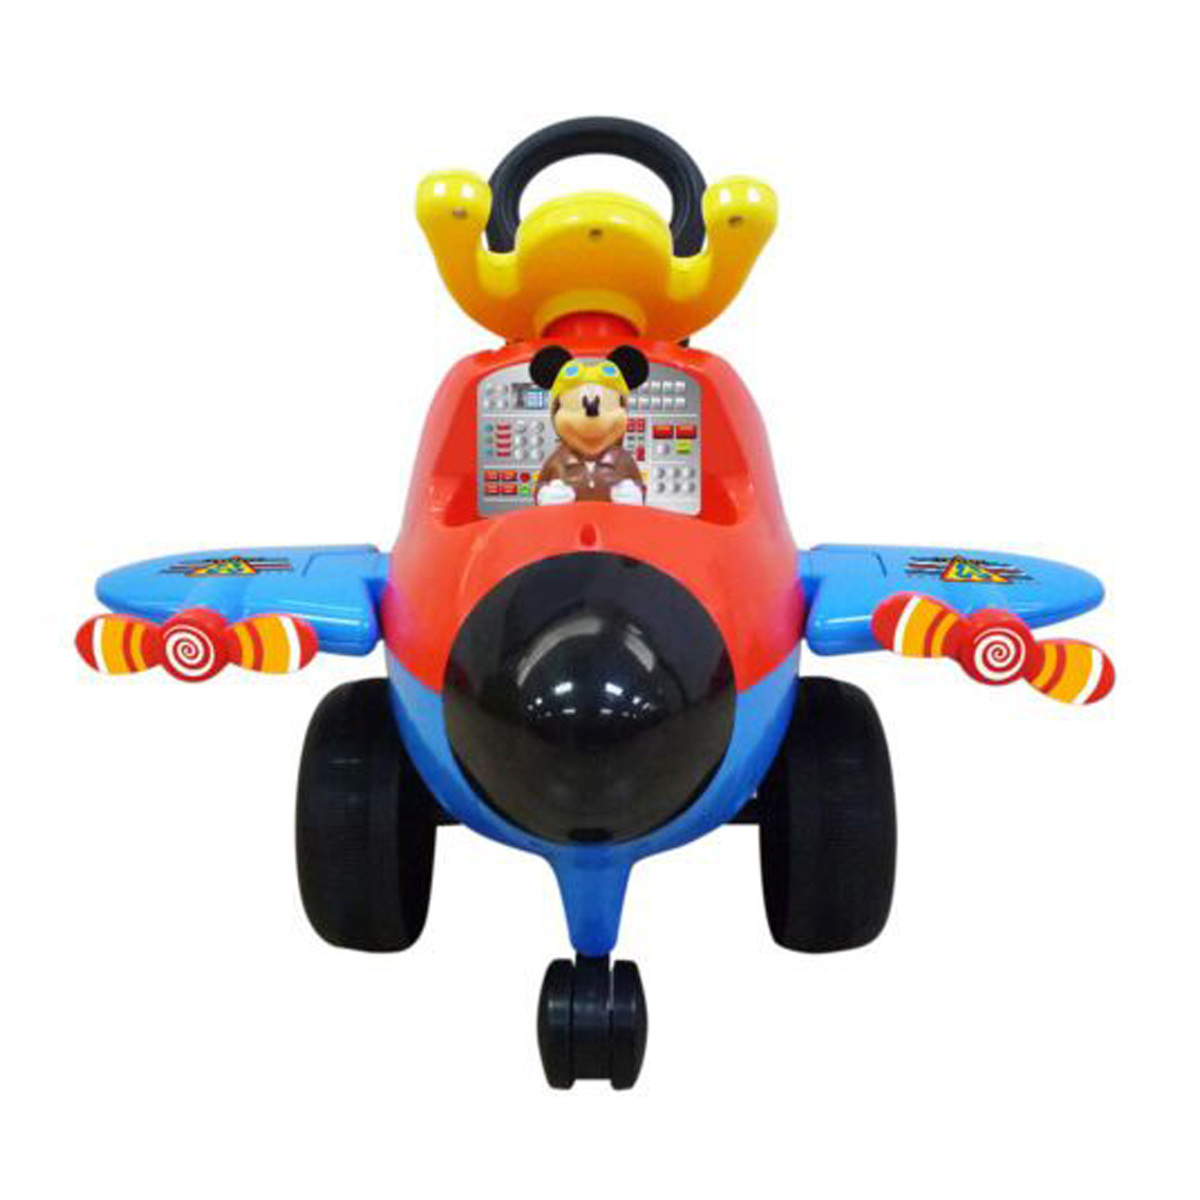 Kiddie Land Mickey Plane Ride-On, 060921